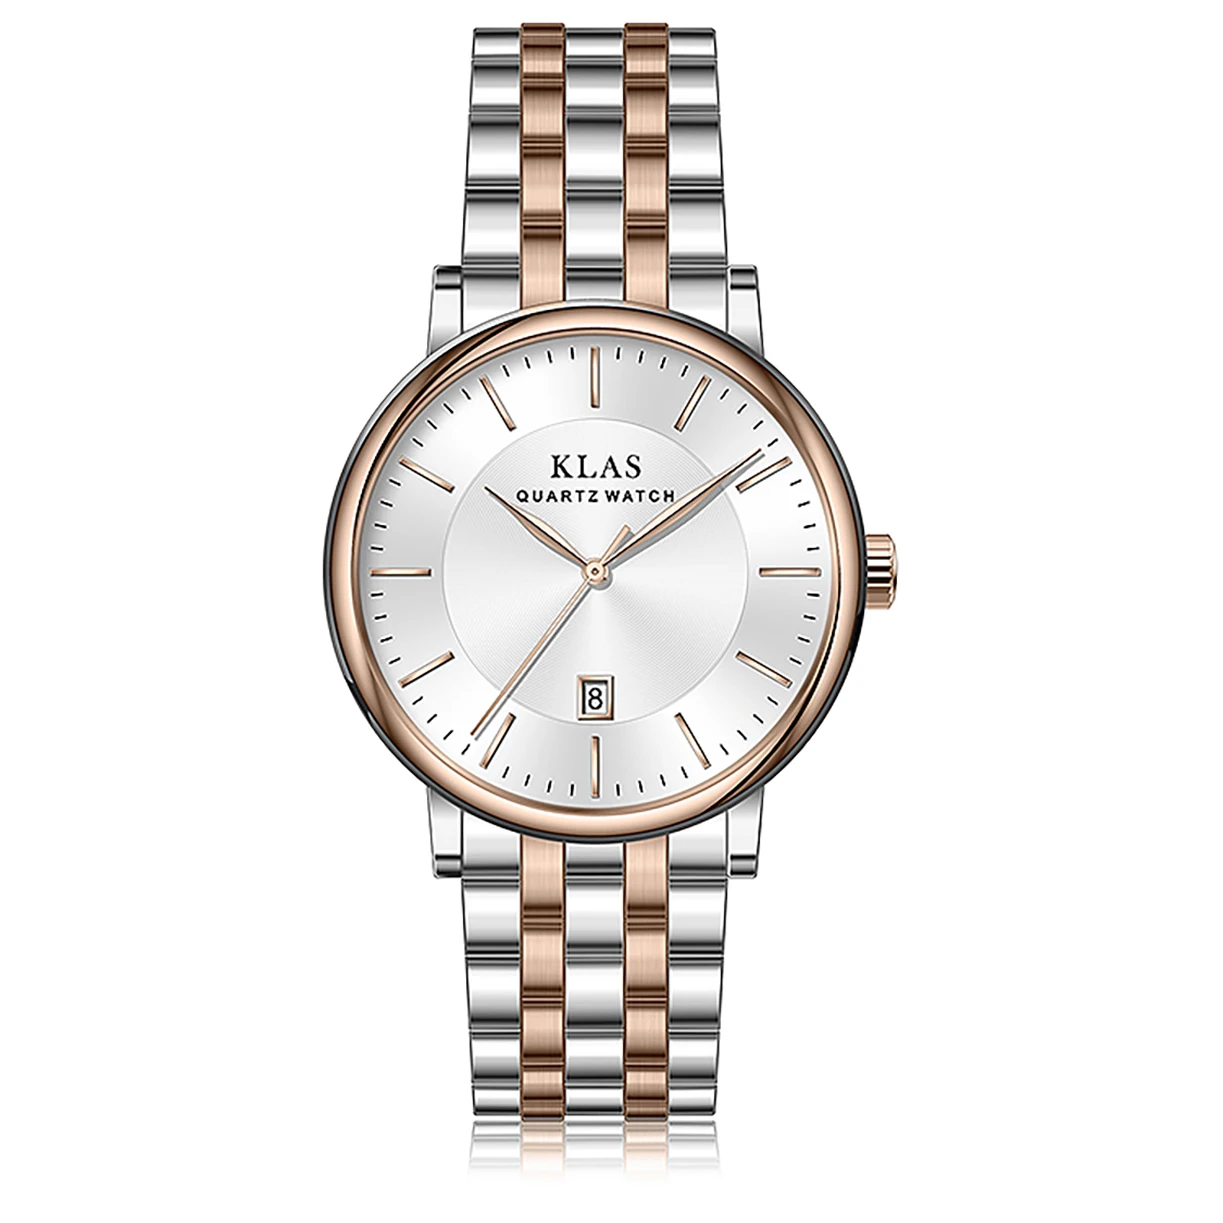 Luxury Fashion Quartz Watch men's stainless steel 20.0 x 18.0 mm Waterproof Calendar Watch with butterfly clasp KLAS brand